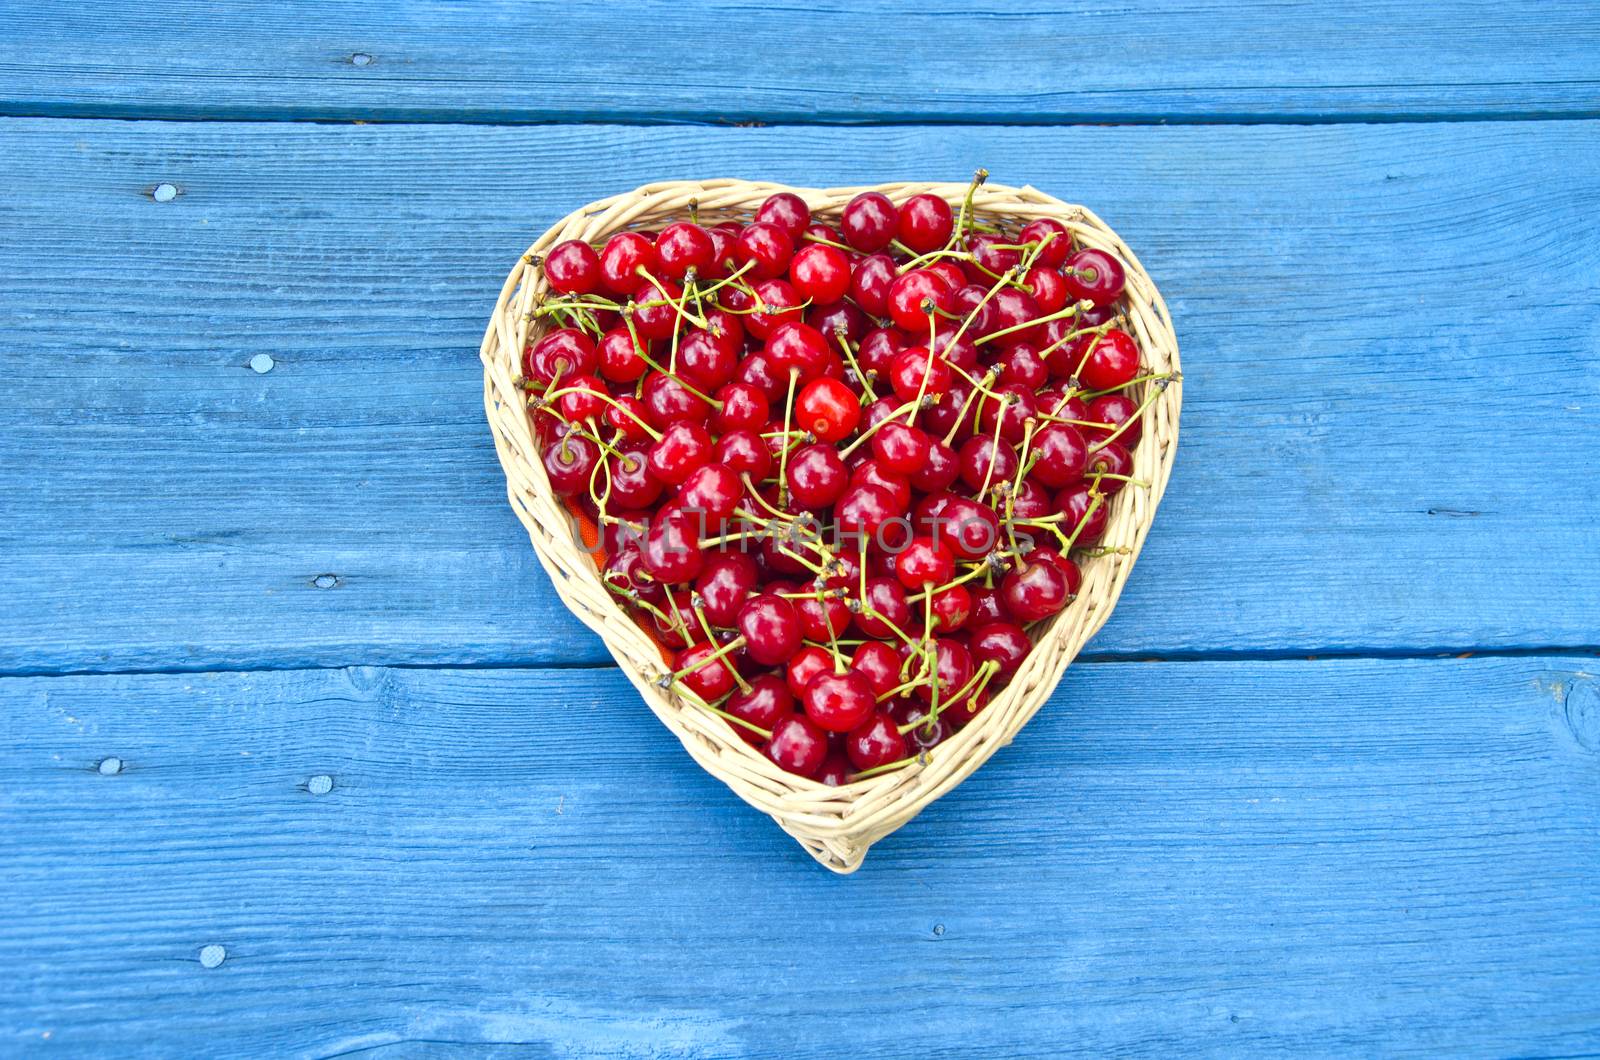 Heart shaped wicker basket full of cherries on blue old garden table wooden background